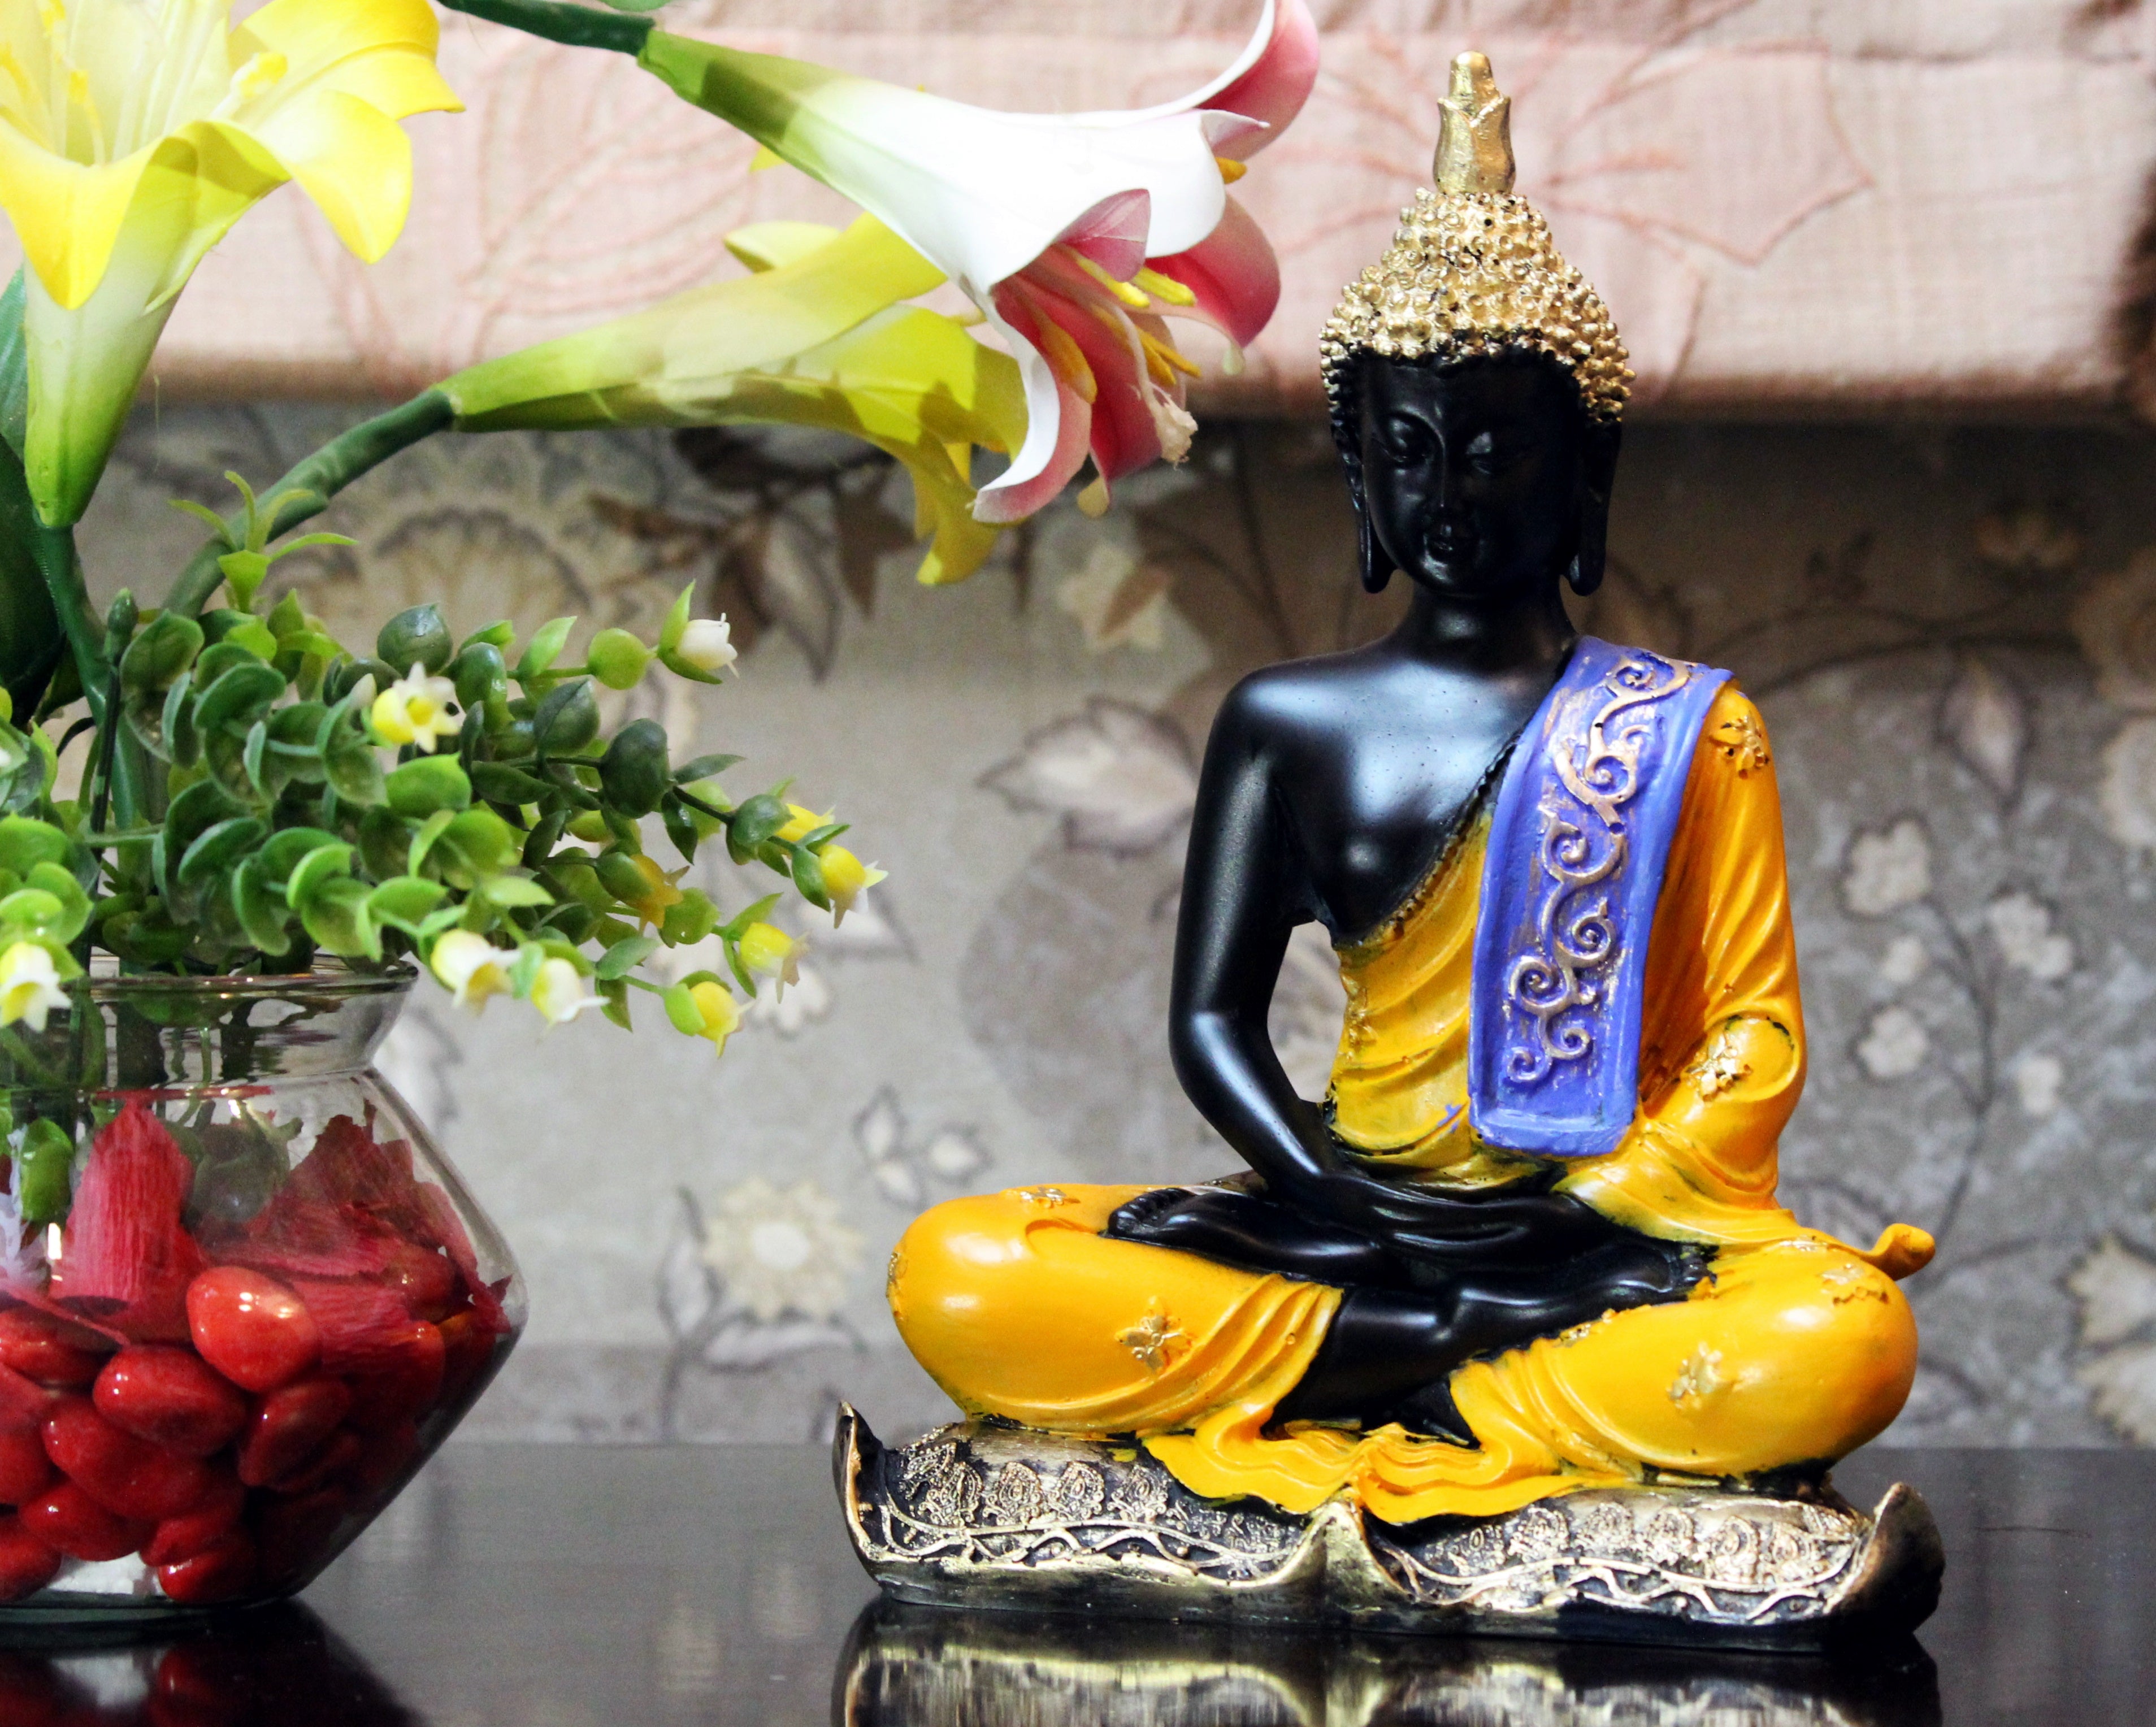 Handcrafted Meditating Decorative Buddha